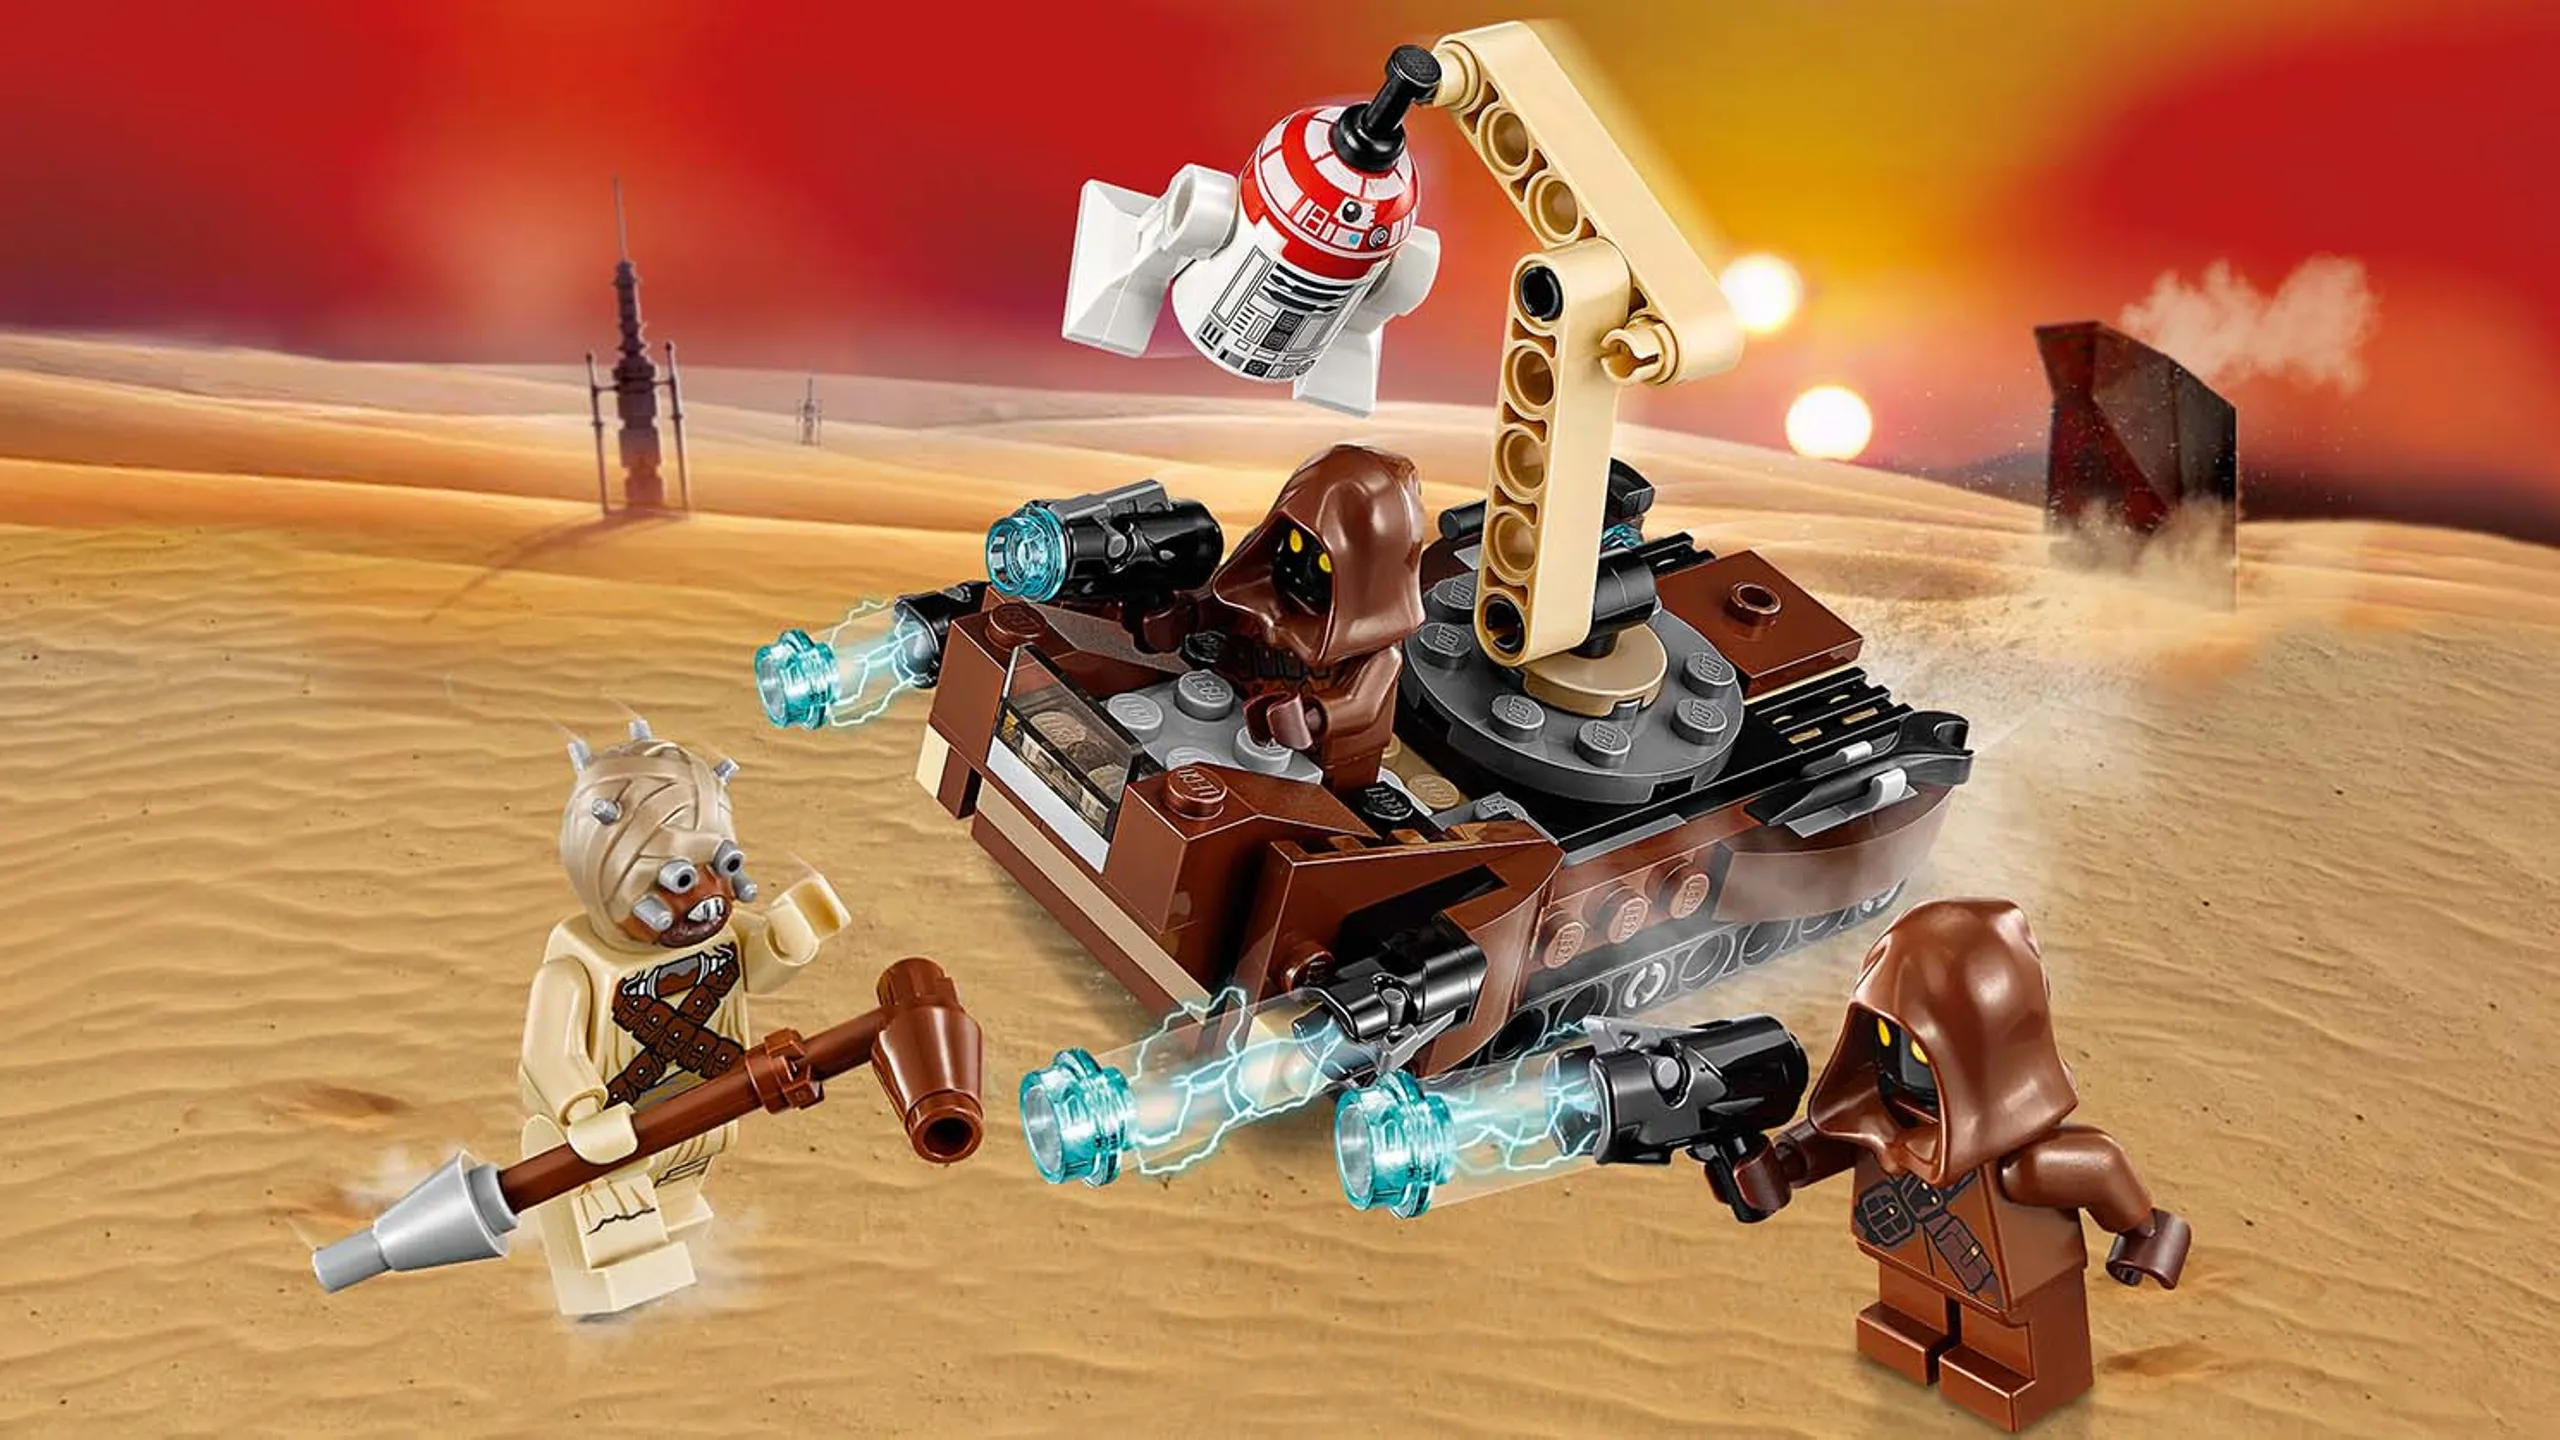 LEGO Star Wars Tatooine™ Battle Pack - 75198 - Tusken Raiders are firing stud shooters!